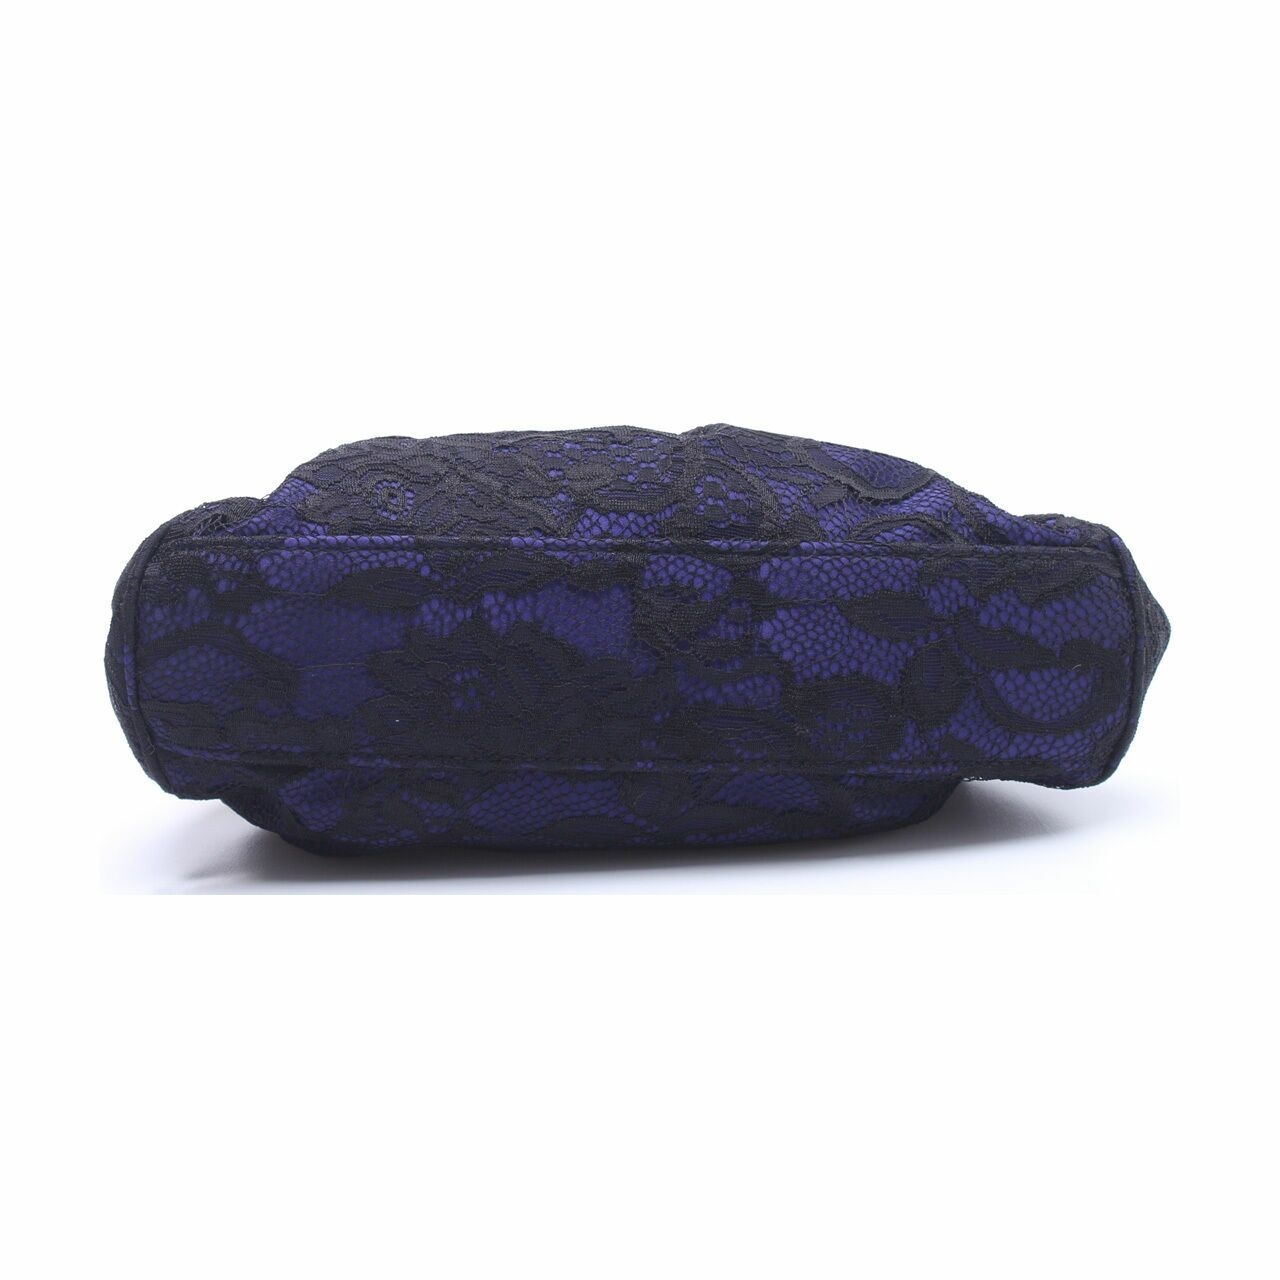 Alannah Hill Purple Lace Clutch